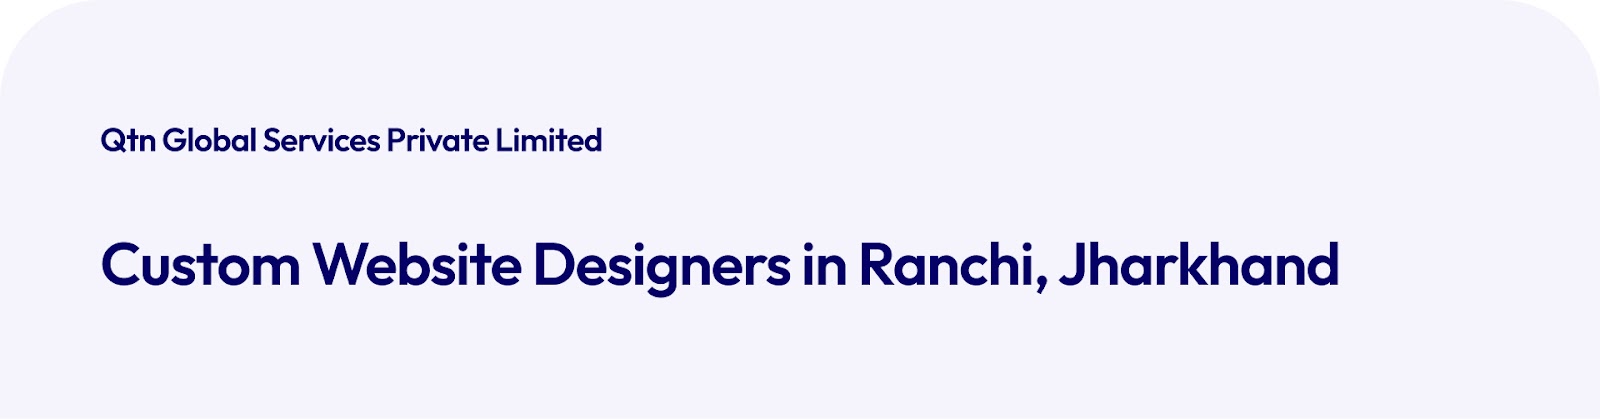 Custom Website Designers in Ranchi, Jharkhand 